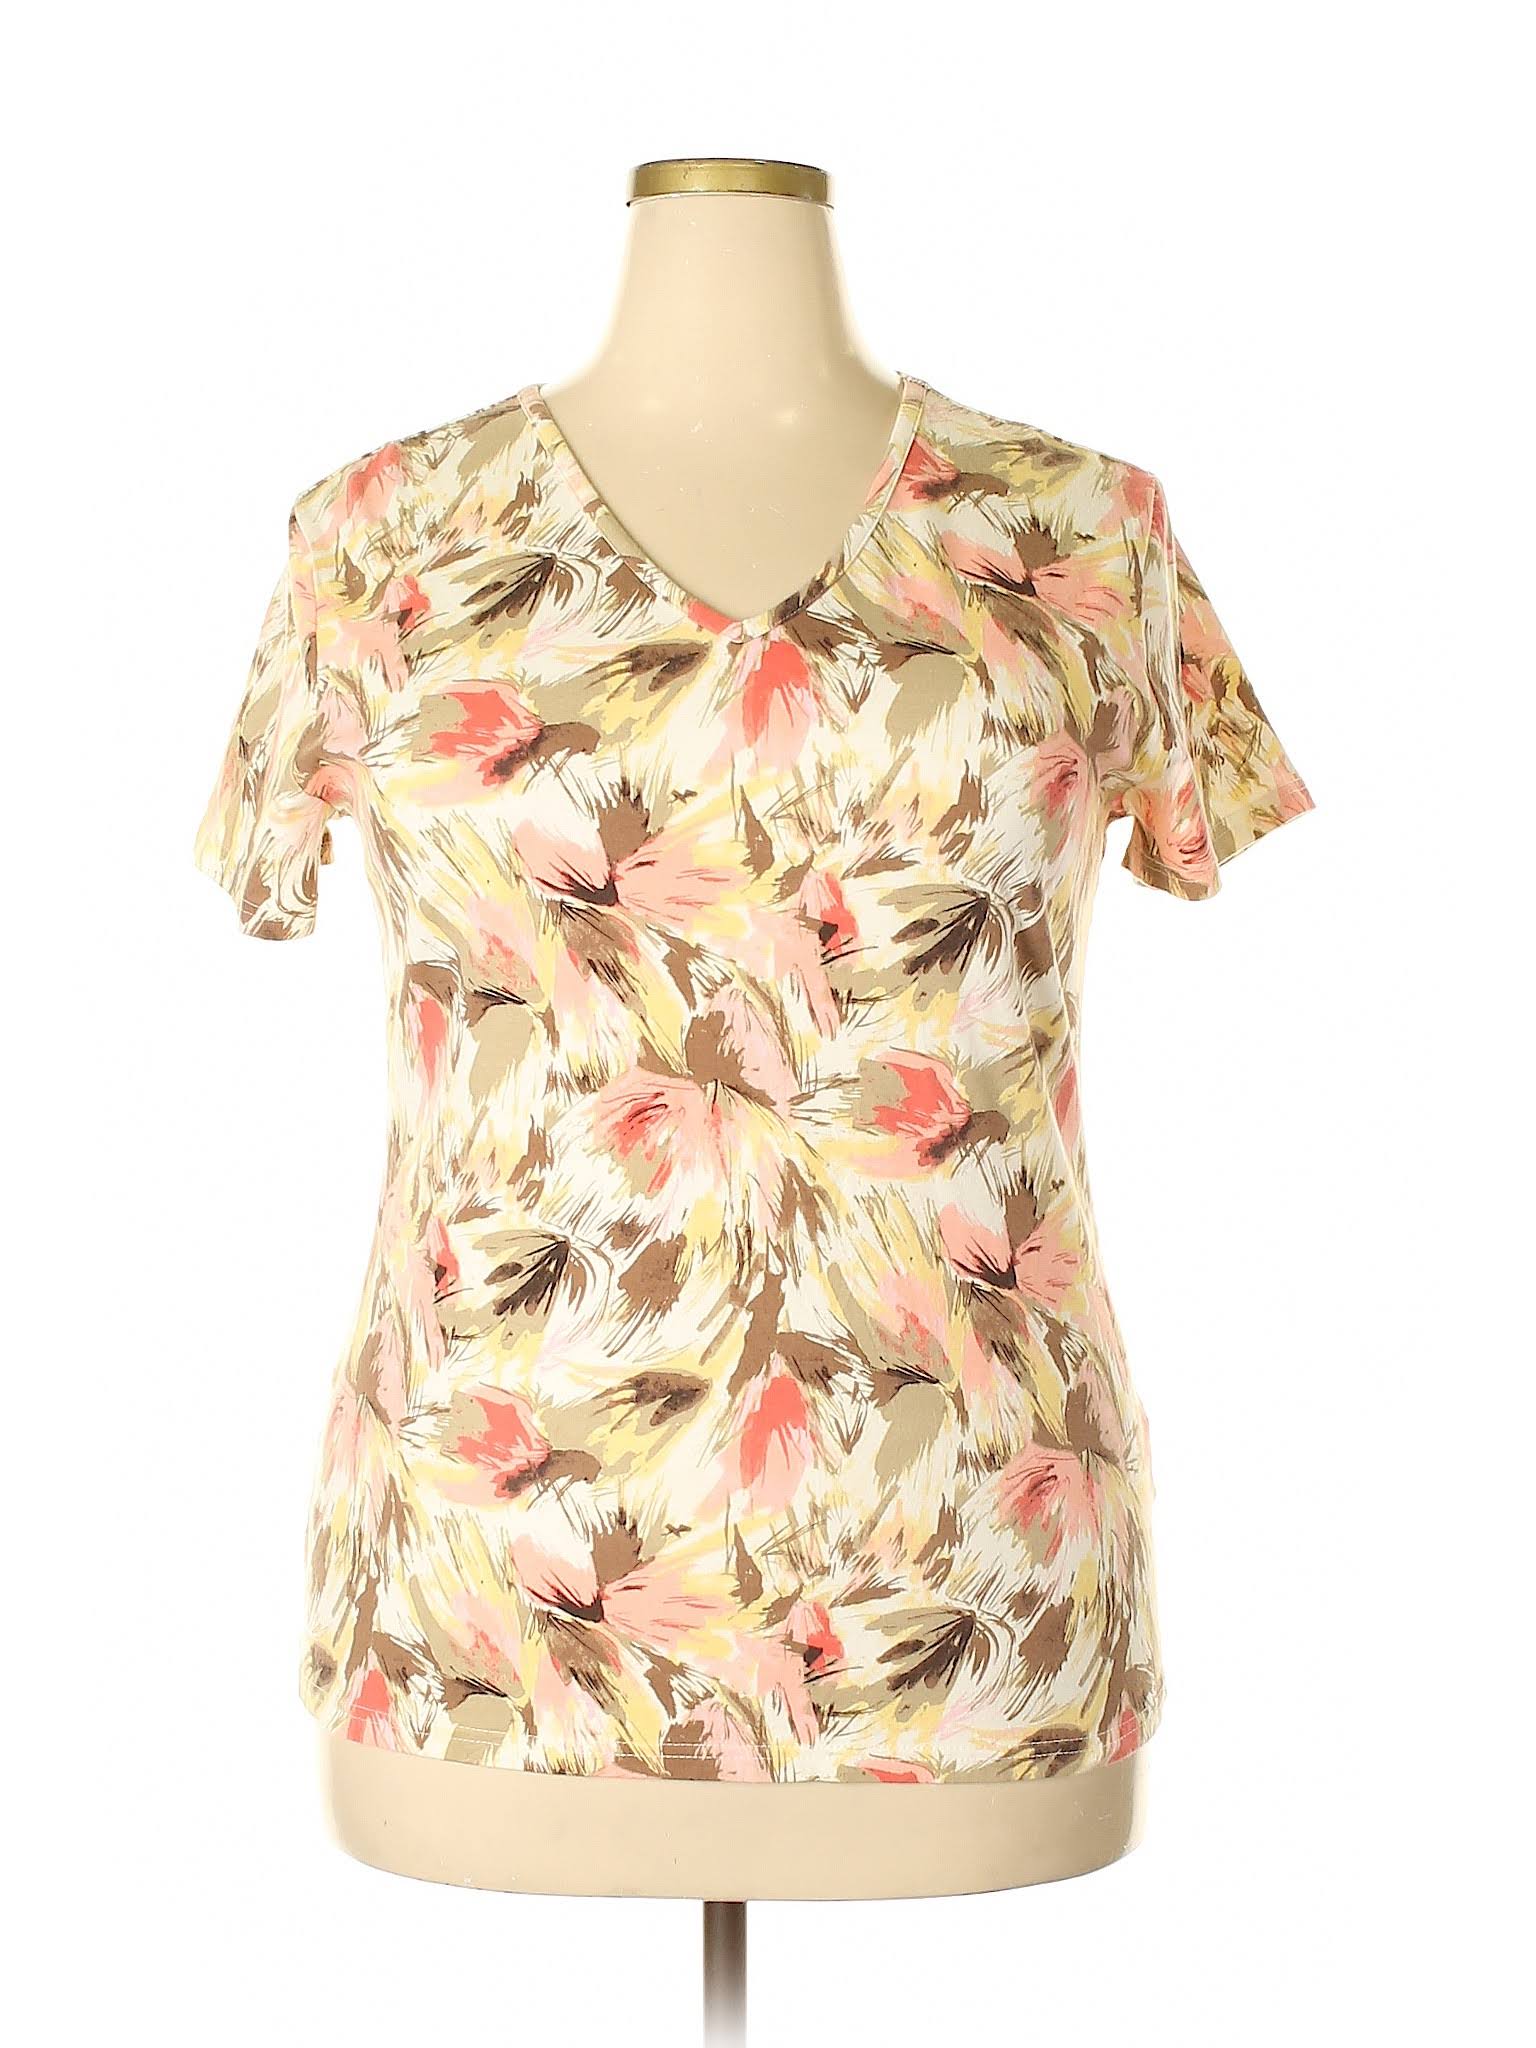 Basic Editions Short Sleeve T Shirt Size 20: Tan Women's Tops - 41861004